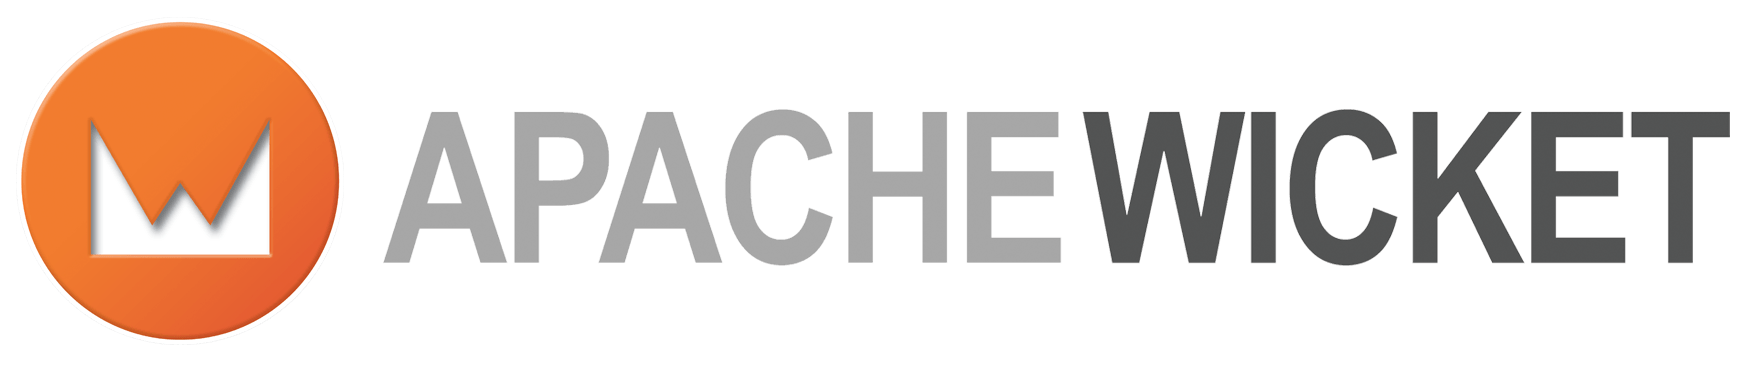 Org.Apache Logo - Apache Wicket 8.3.0, Browsing & More